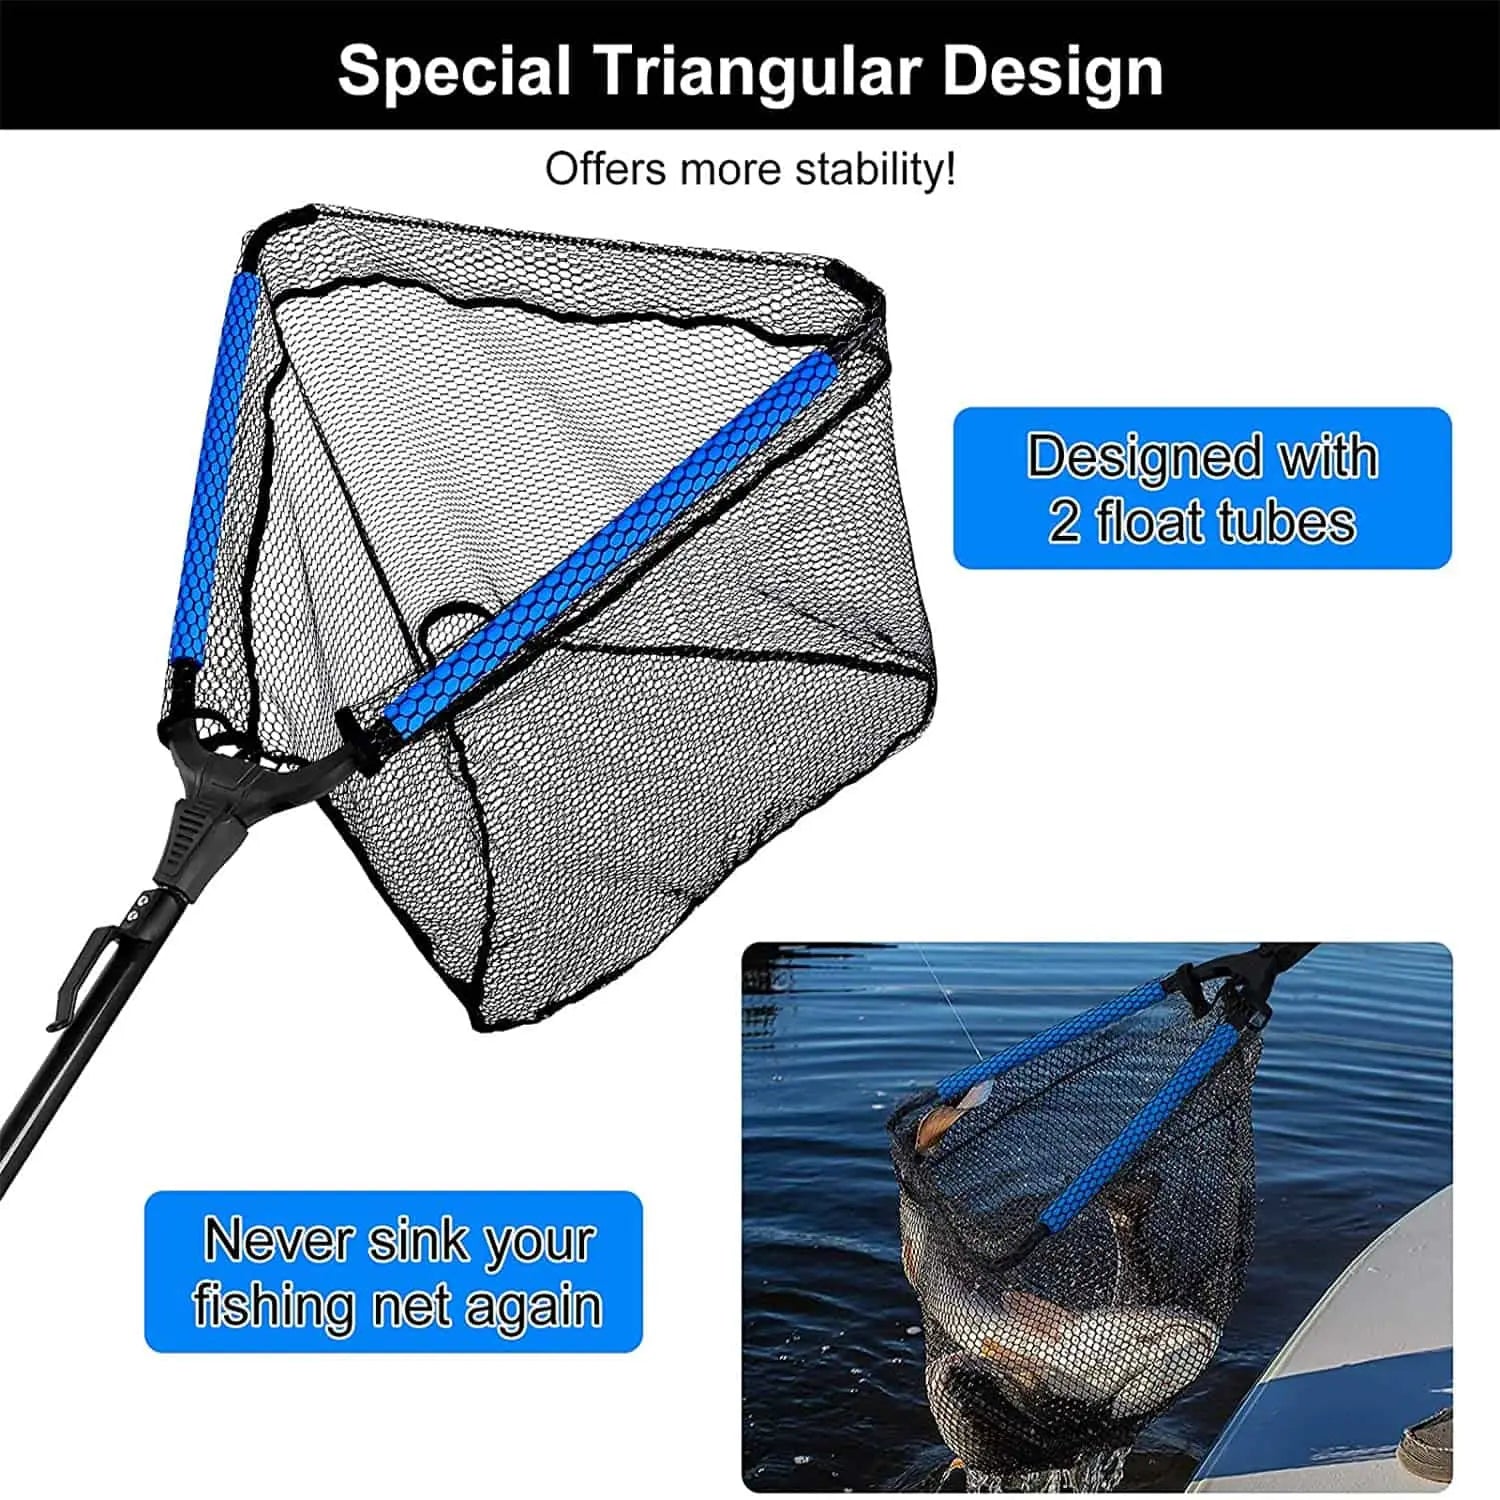 PLUSINNO FN3 Triangular Floating Fish Landing Net with Fixed Pole – Plusinno